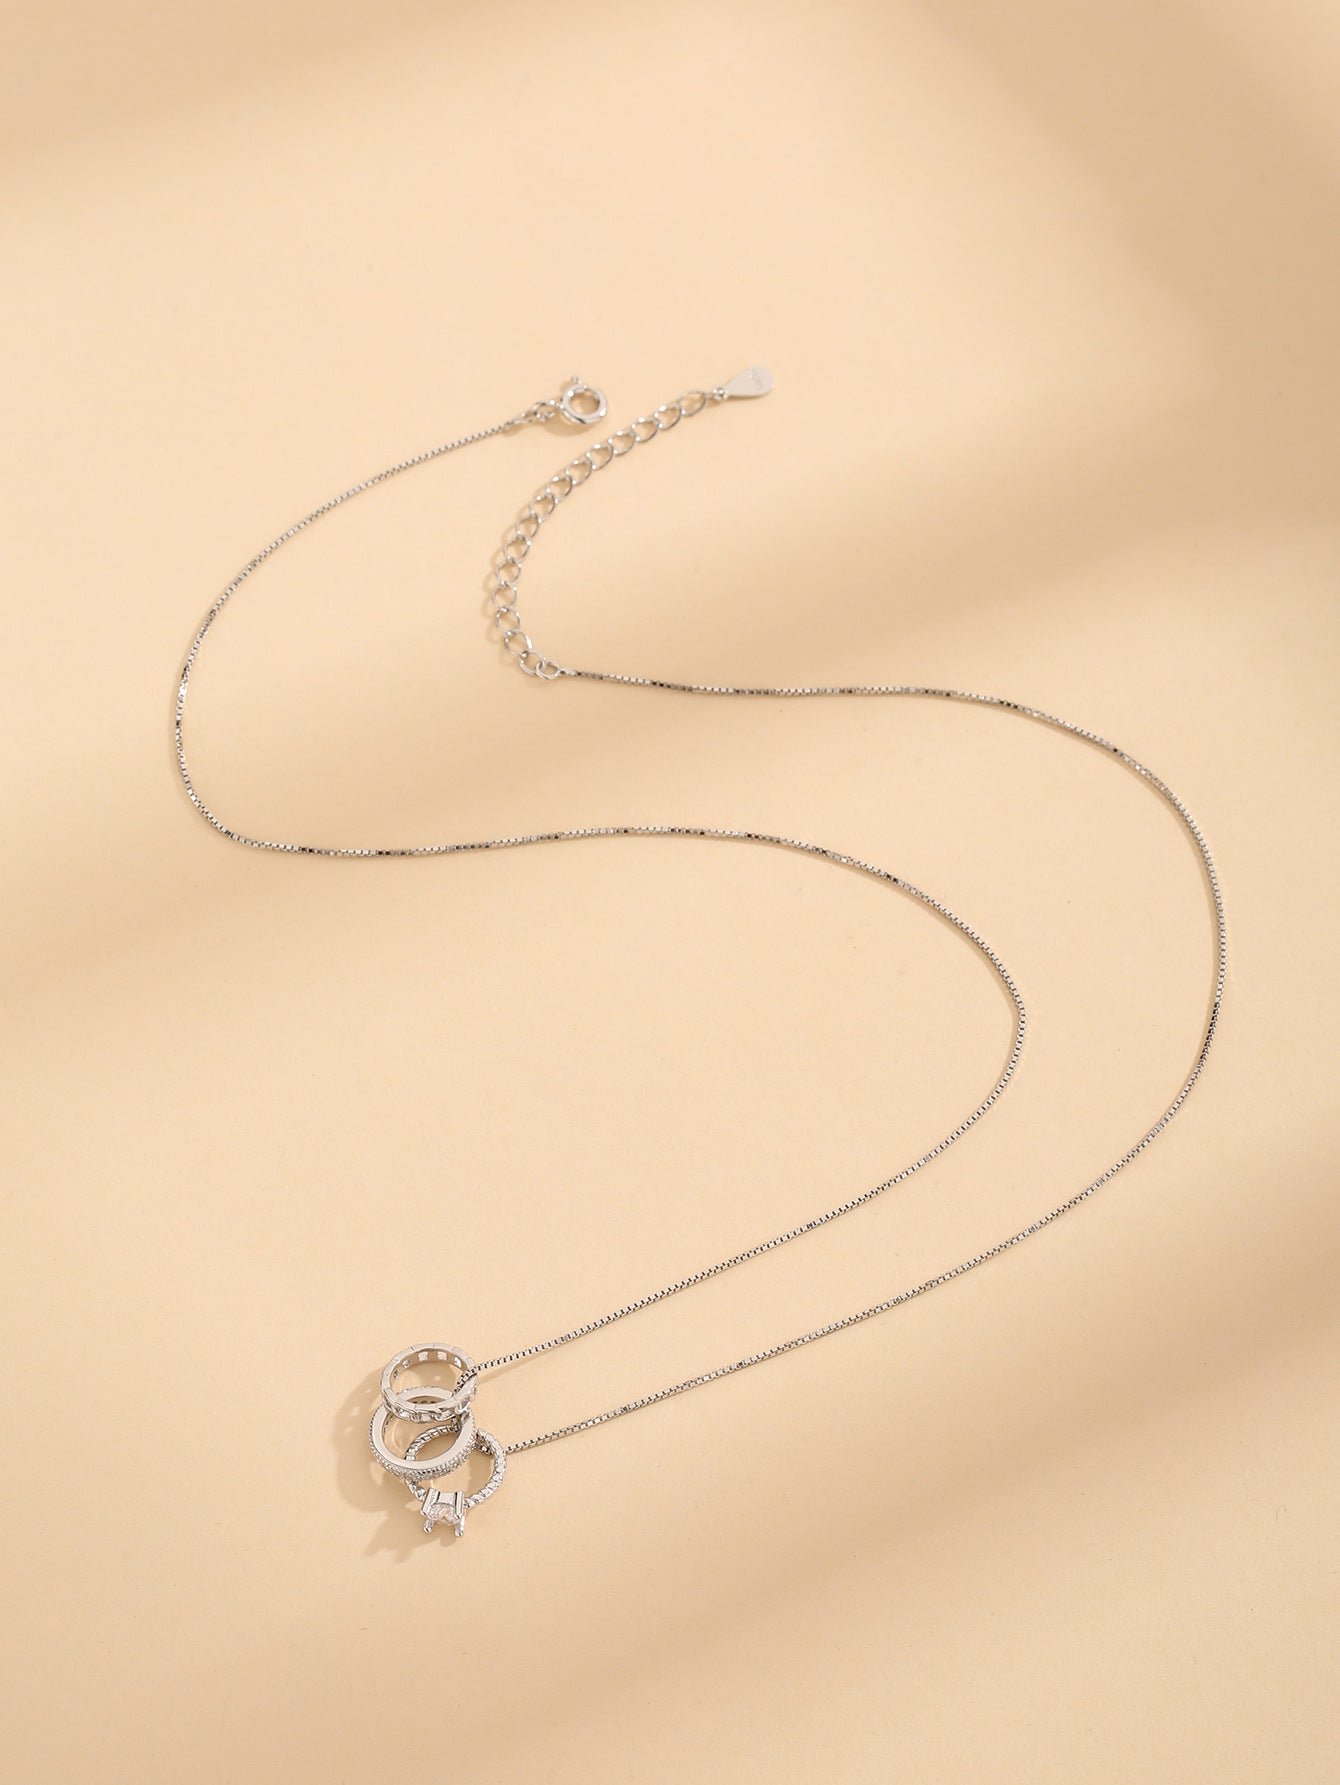 Zircon 925 Sterling Silver Necklace